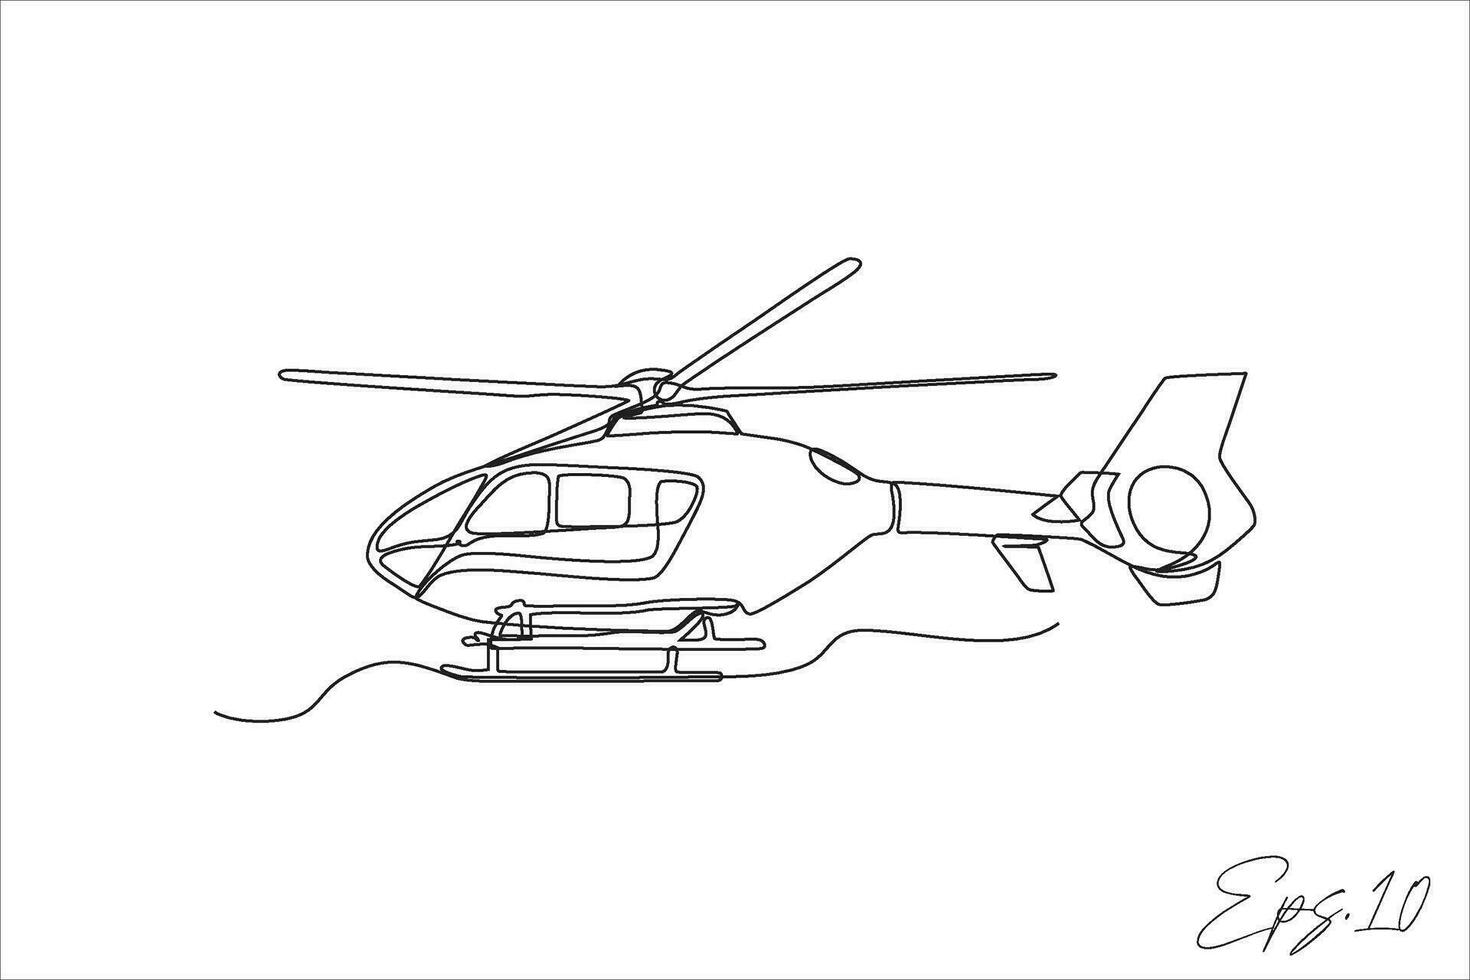 helikopter flygplan kontinuerlig linje vektor illustration